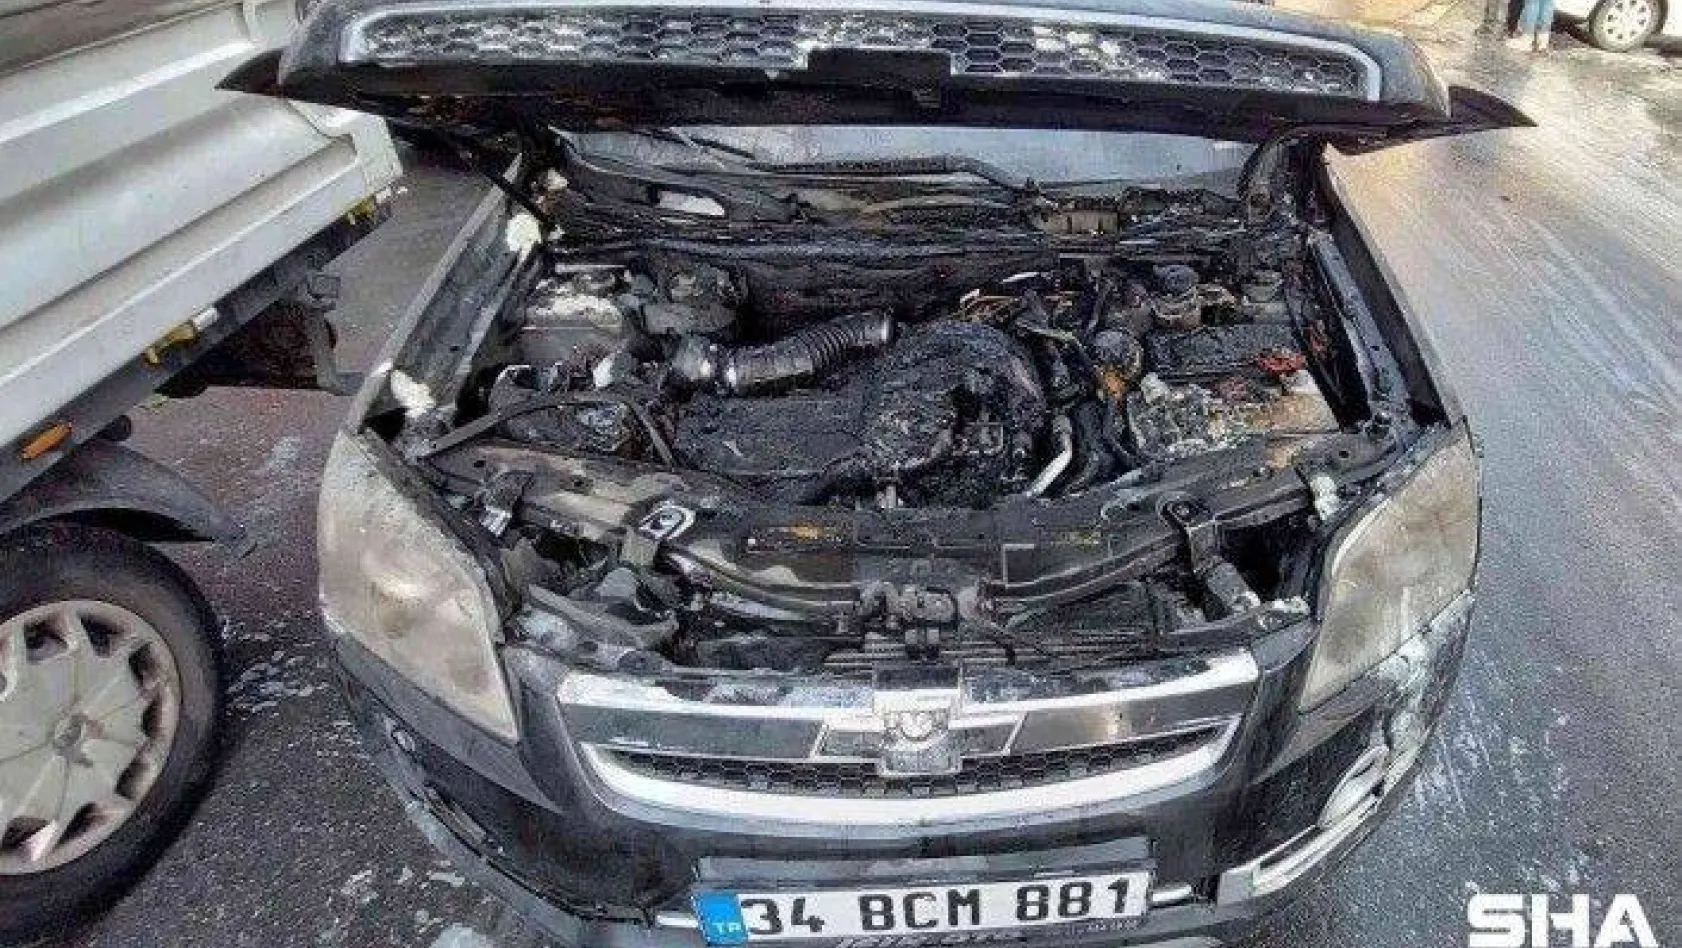 Fatih'te otomobil alev alev yandı